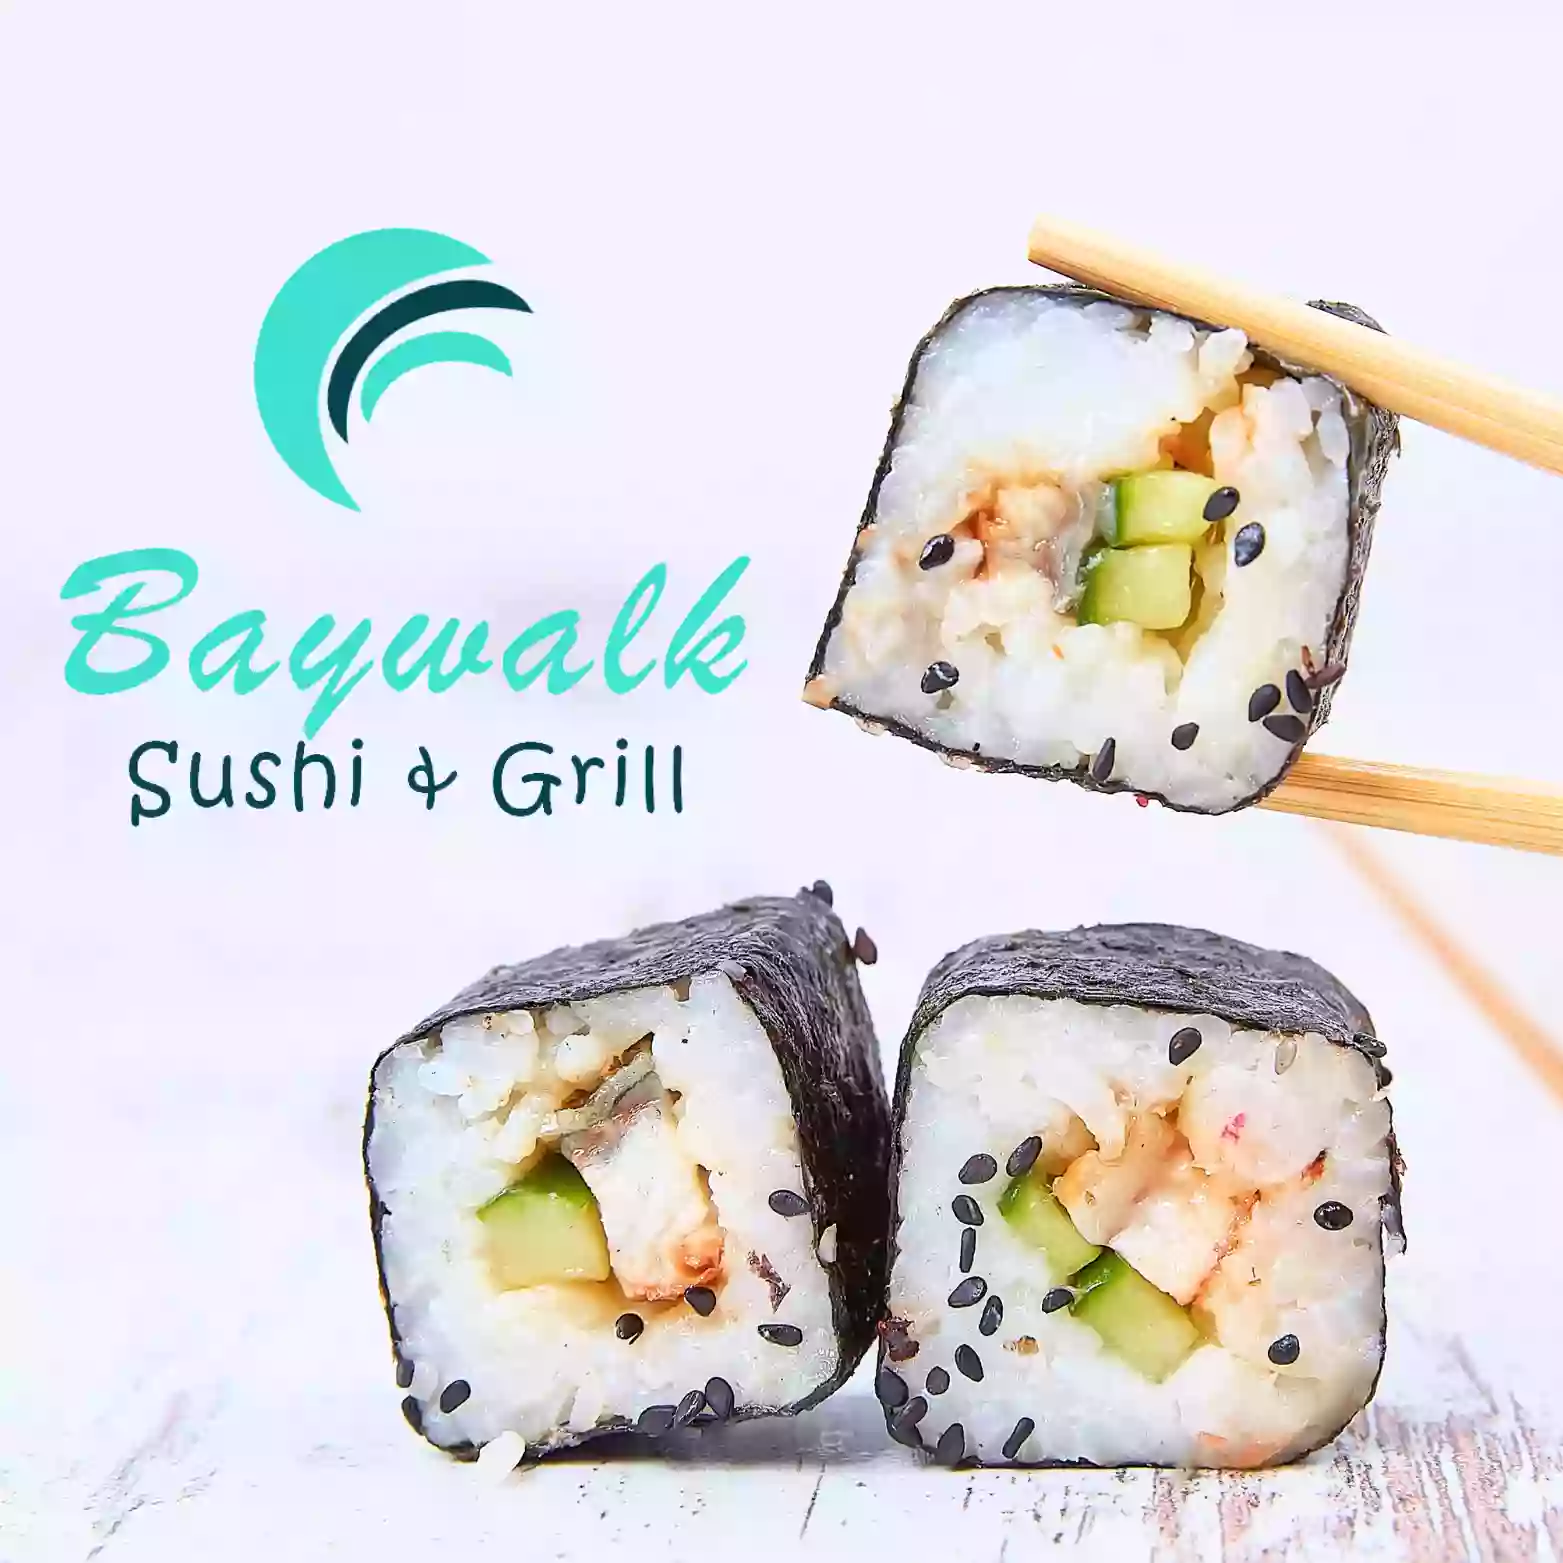 Baywalk Sushi & Café